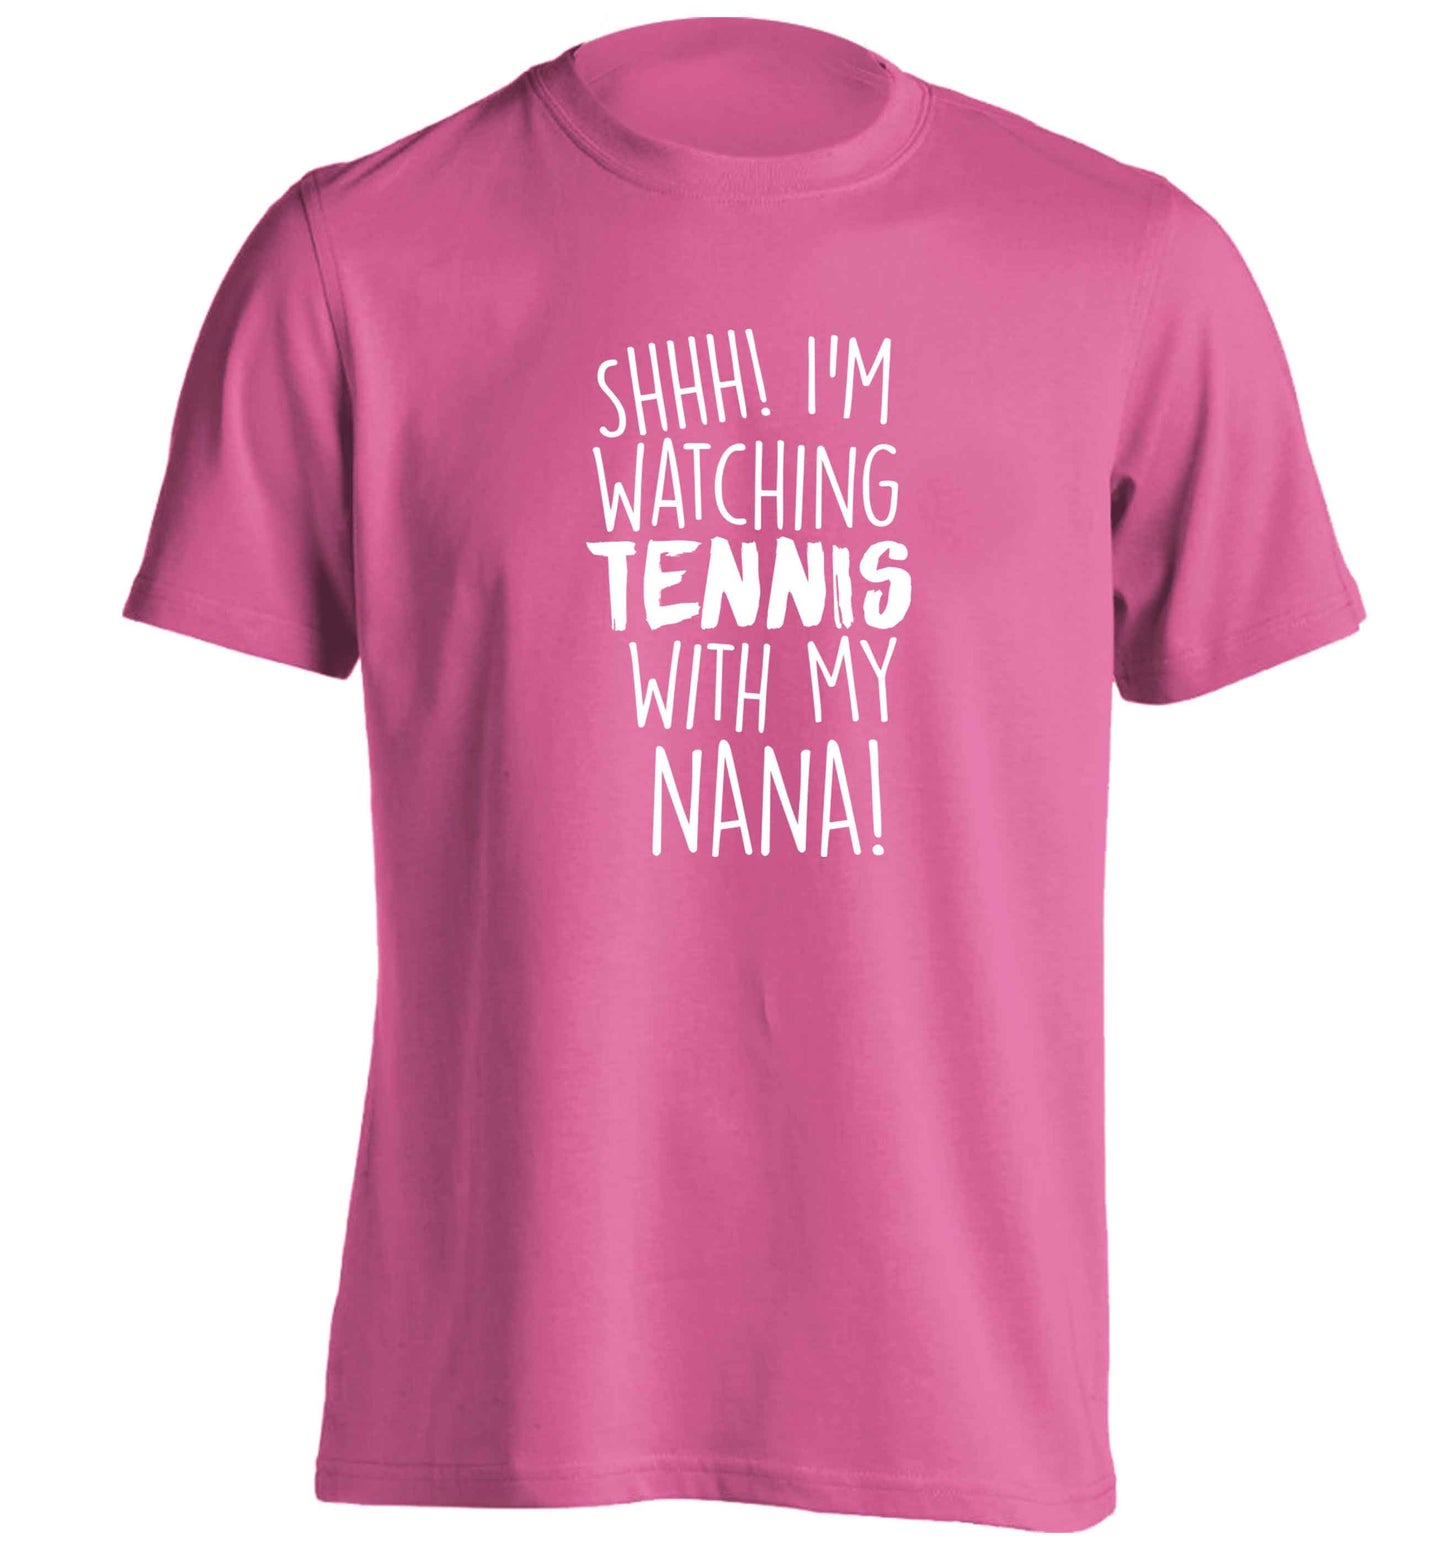 Shh! I'm watching tennis with my nana! adults unisex pink Tshirt 2XL